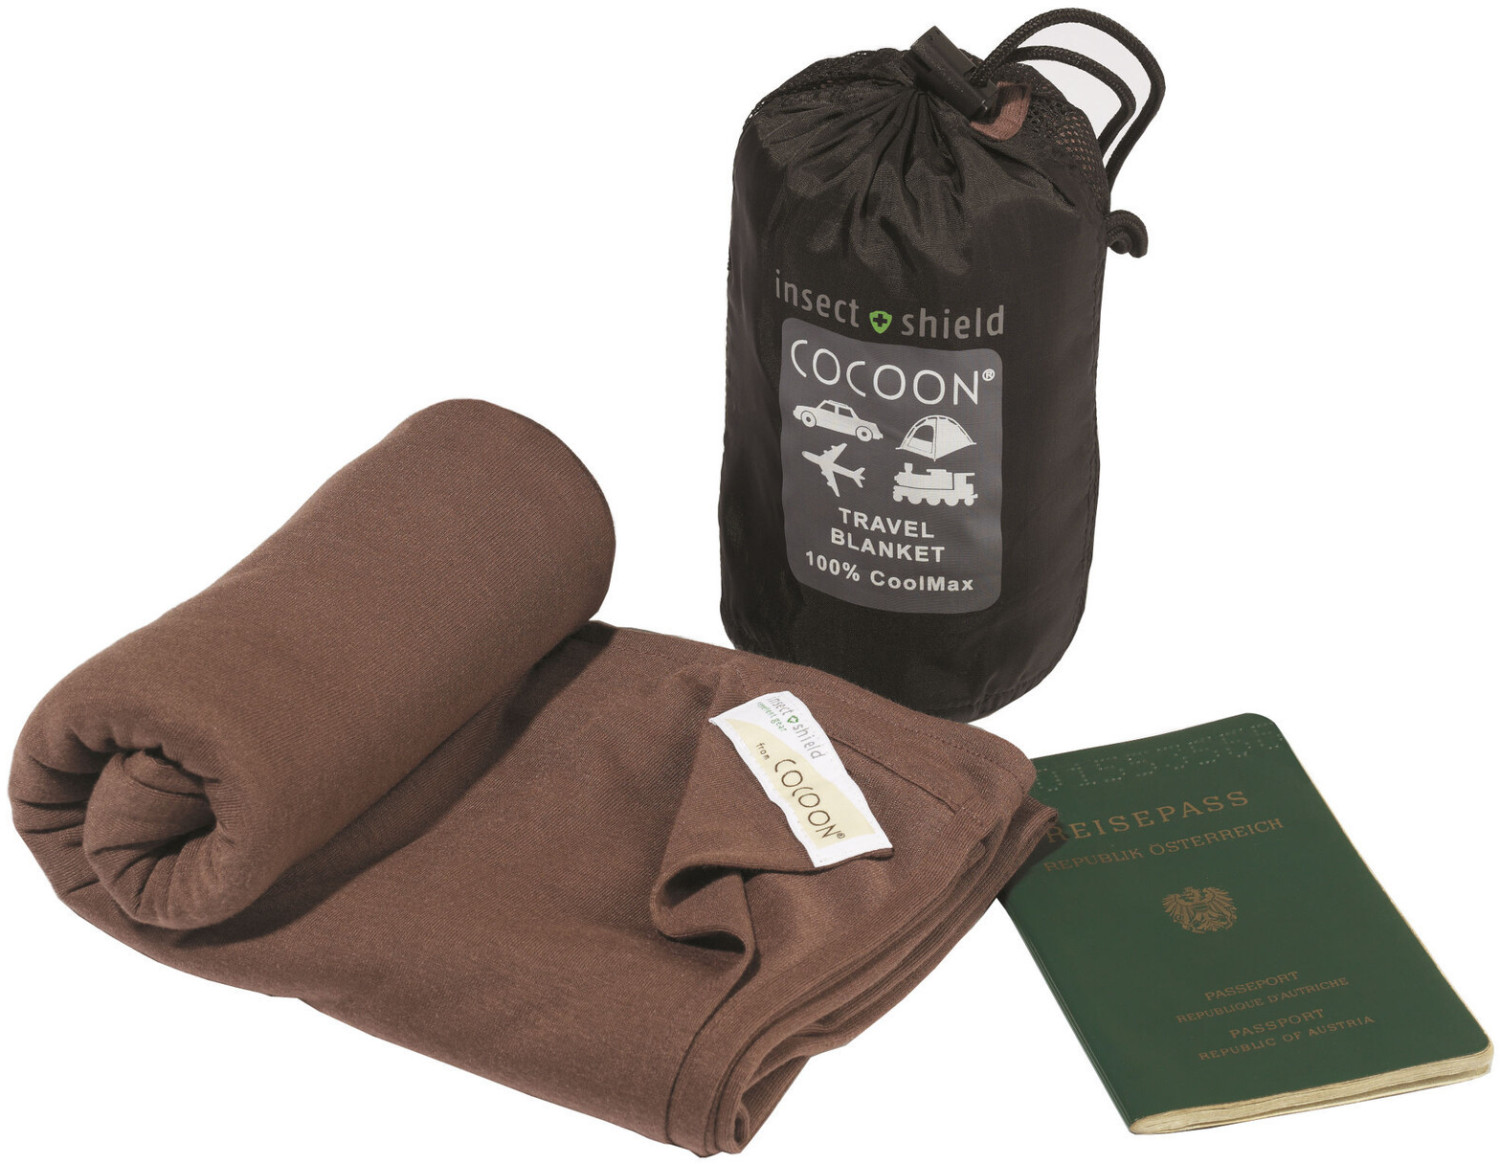 Photos - Sleeping Bag Cocoon Insect Shield Travel Blanket CoolMax kalahari brown 